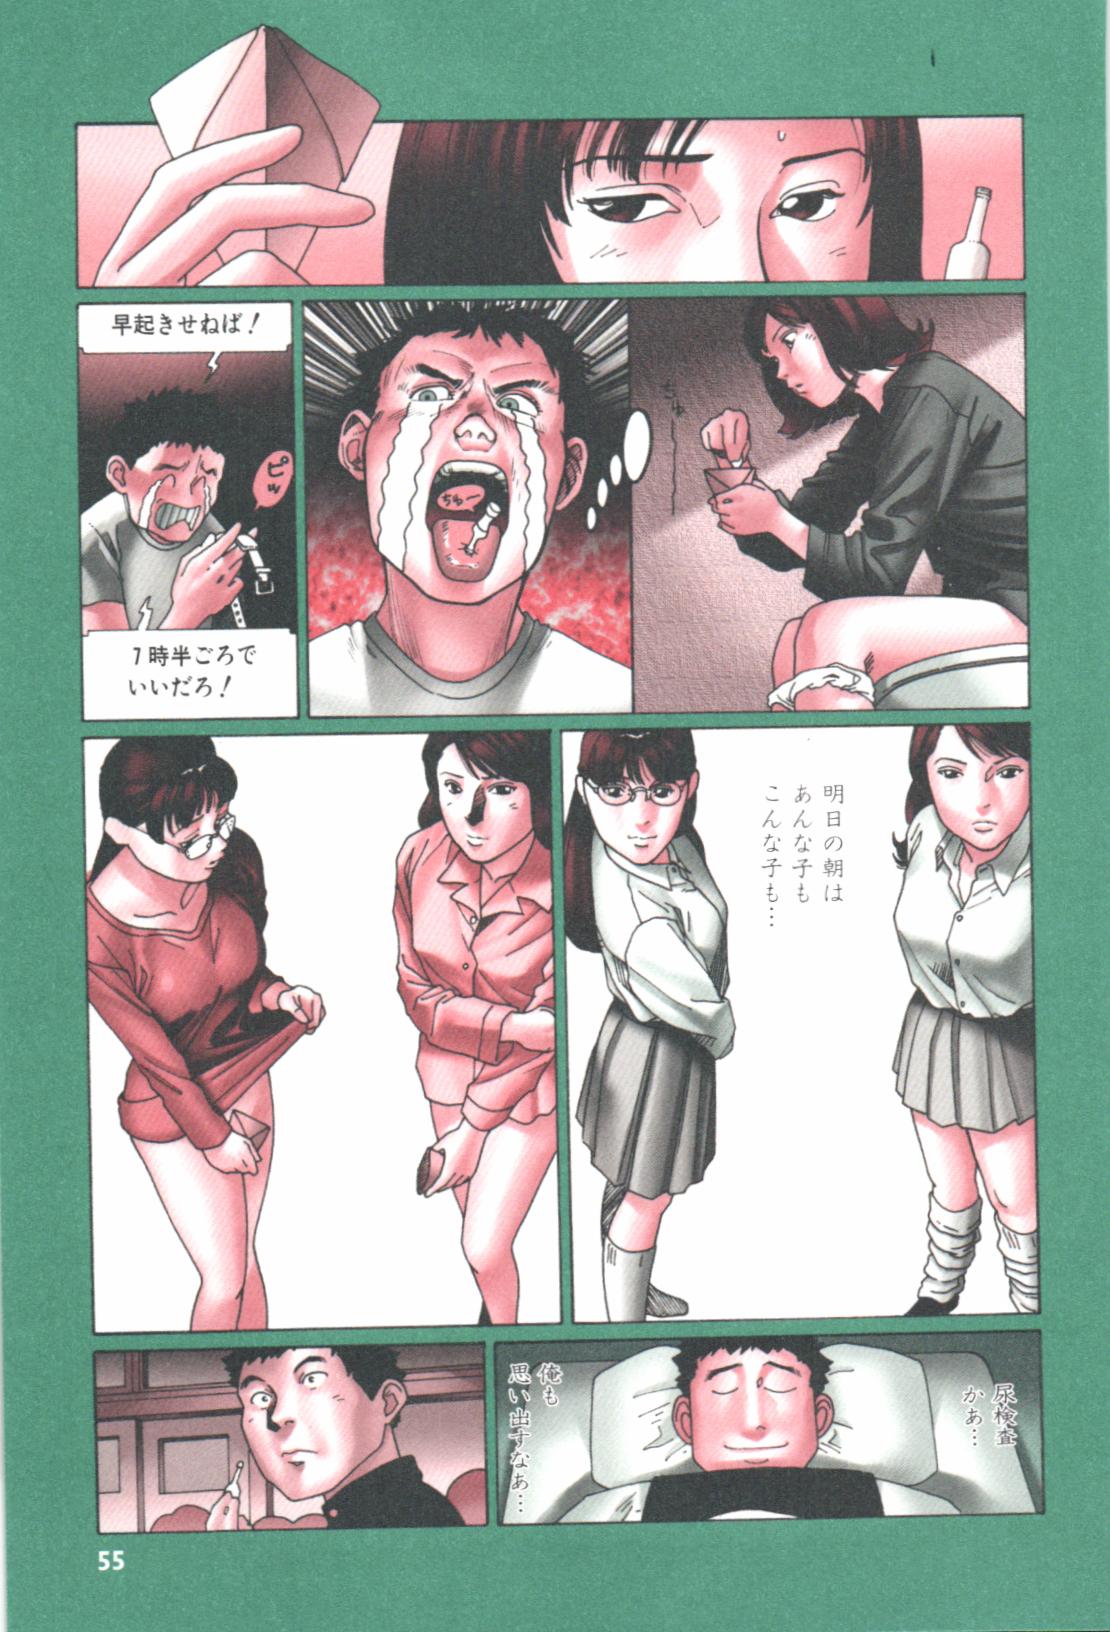 [Kishi Torajiro] Colorful Vol.5 (RAW) [岸虎次郎] カラフル 第5巻